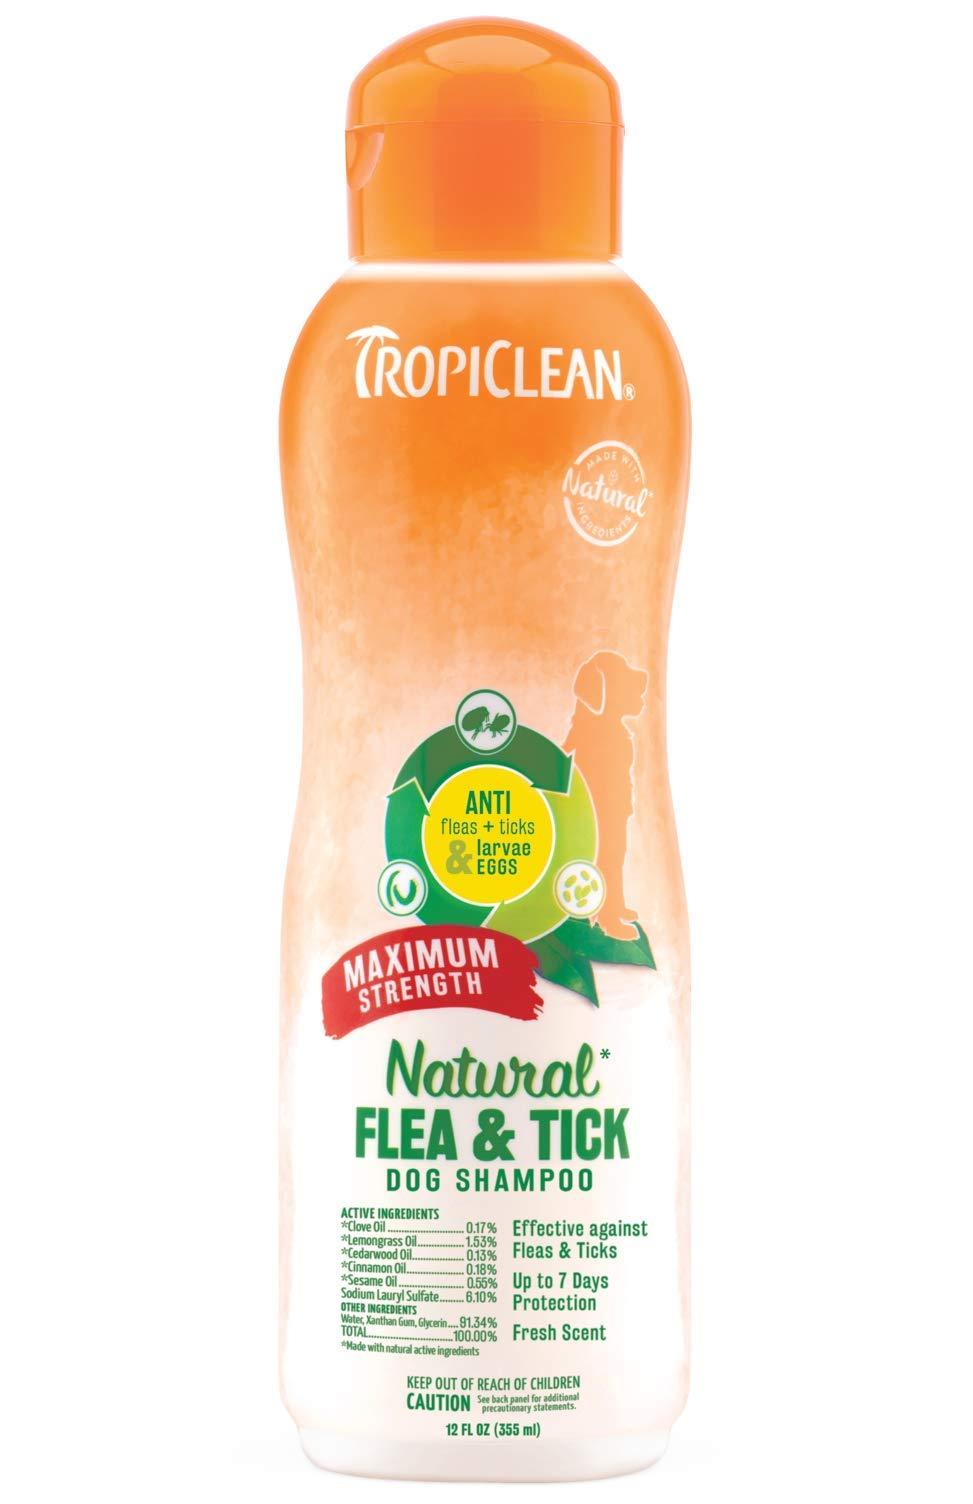 TropiClean Natural Flea & Tick Shampoo for Dogs - Made in USA - Kills 99% of Fleas, Ticks, Larvae, Eggs by Contact - EPA-Approved Cedarwood & Lemongrass Oil (335 ml) - PawsPlanet Australia